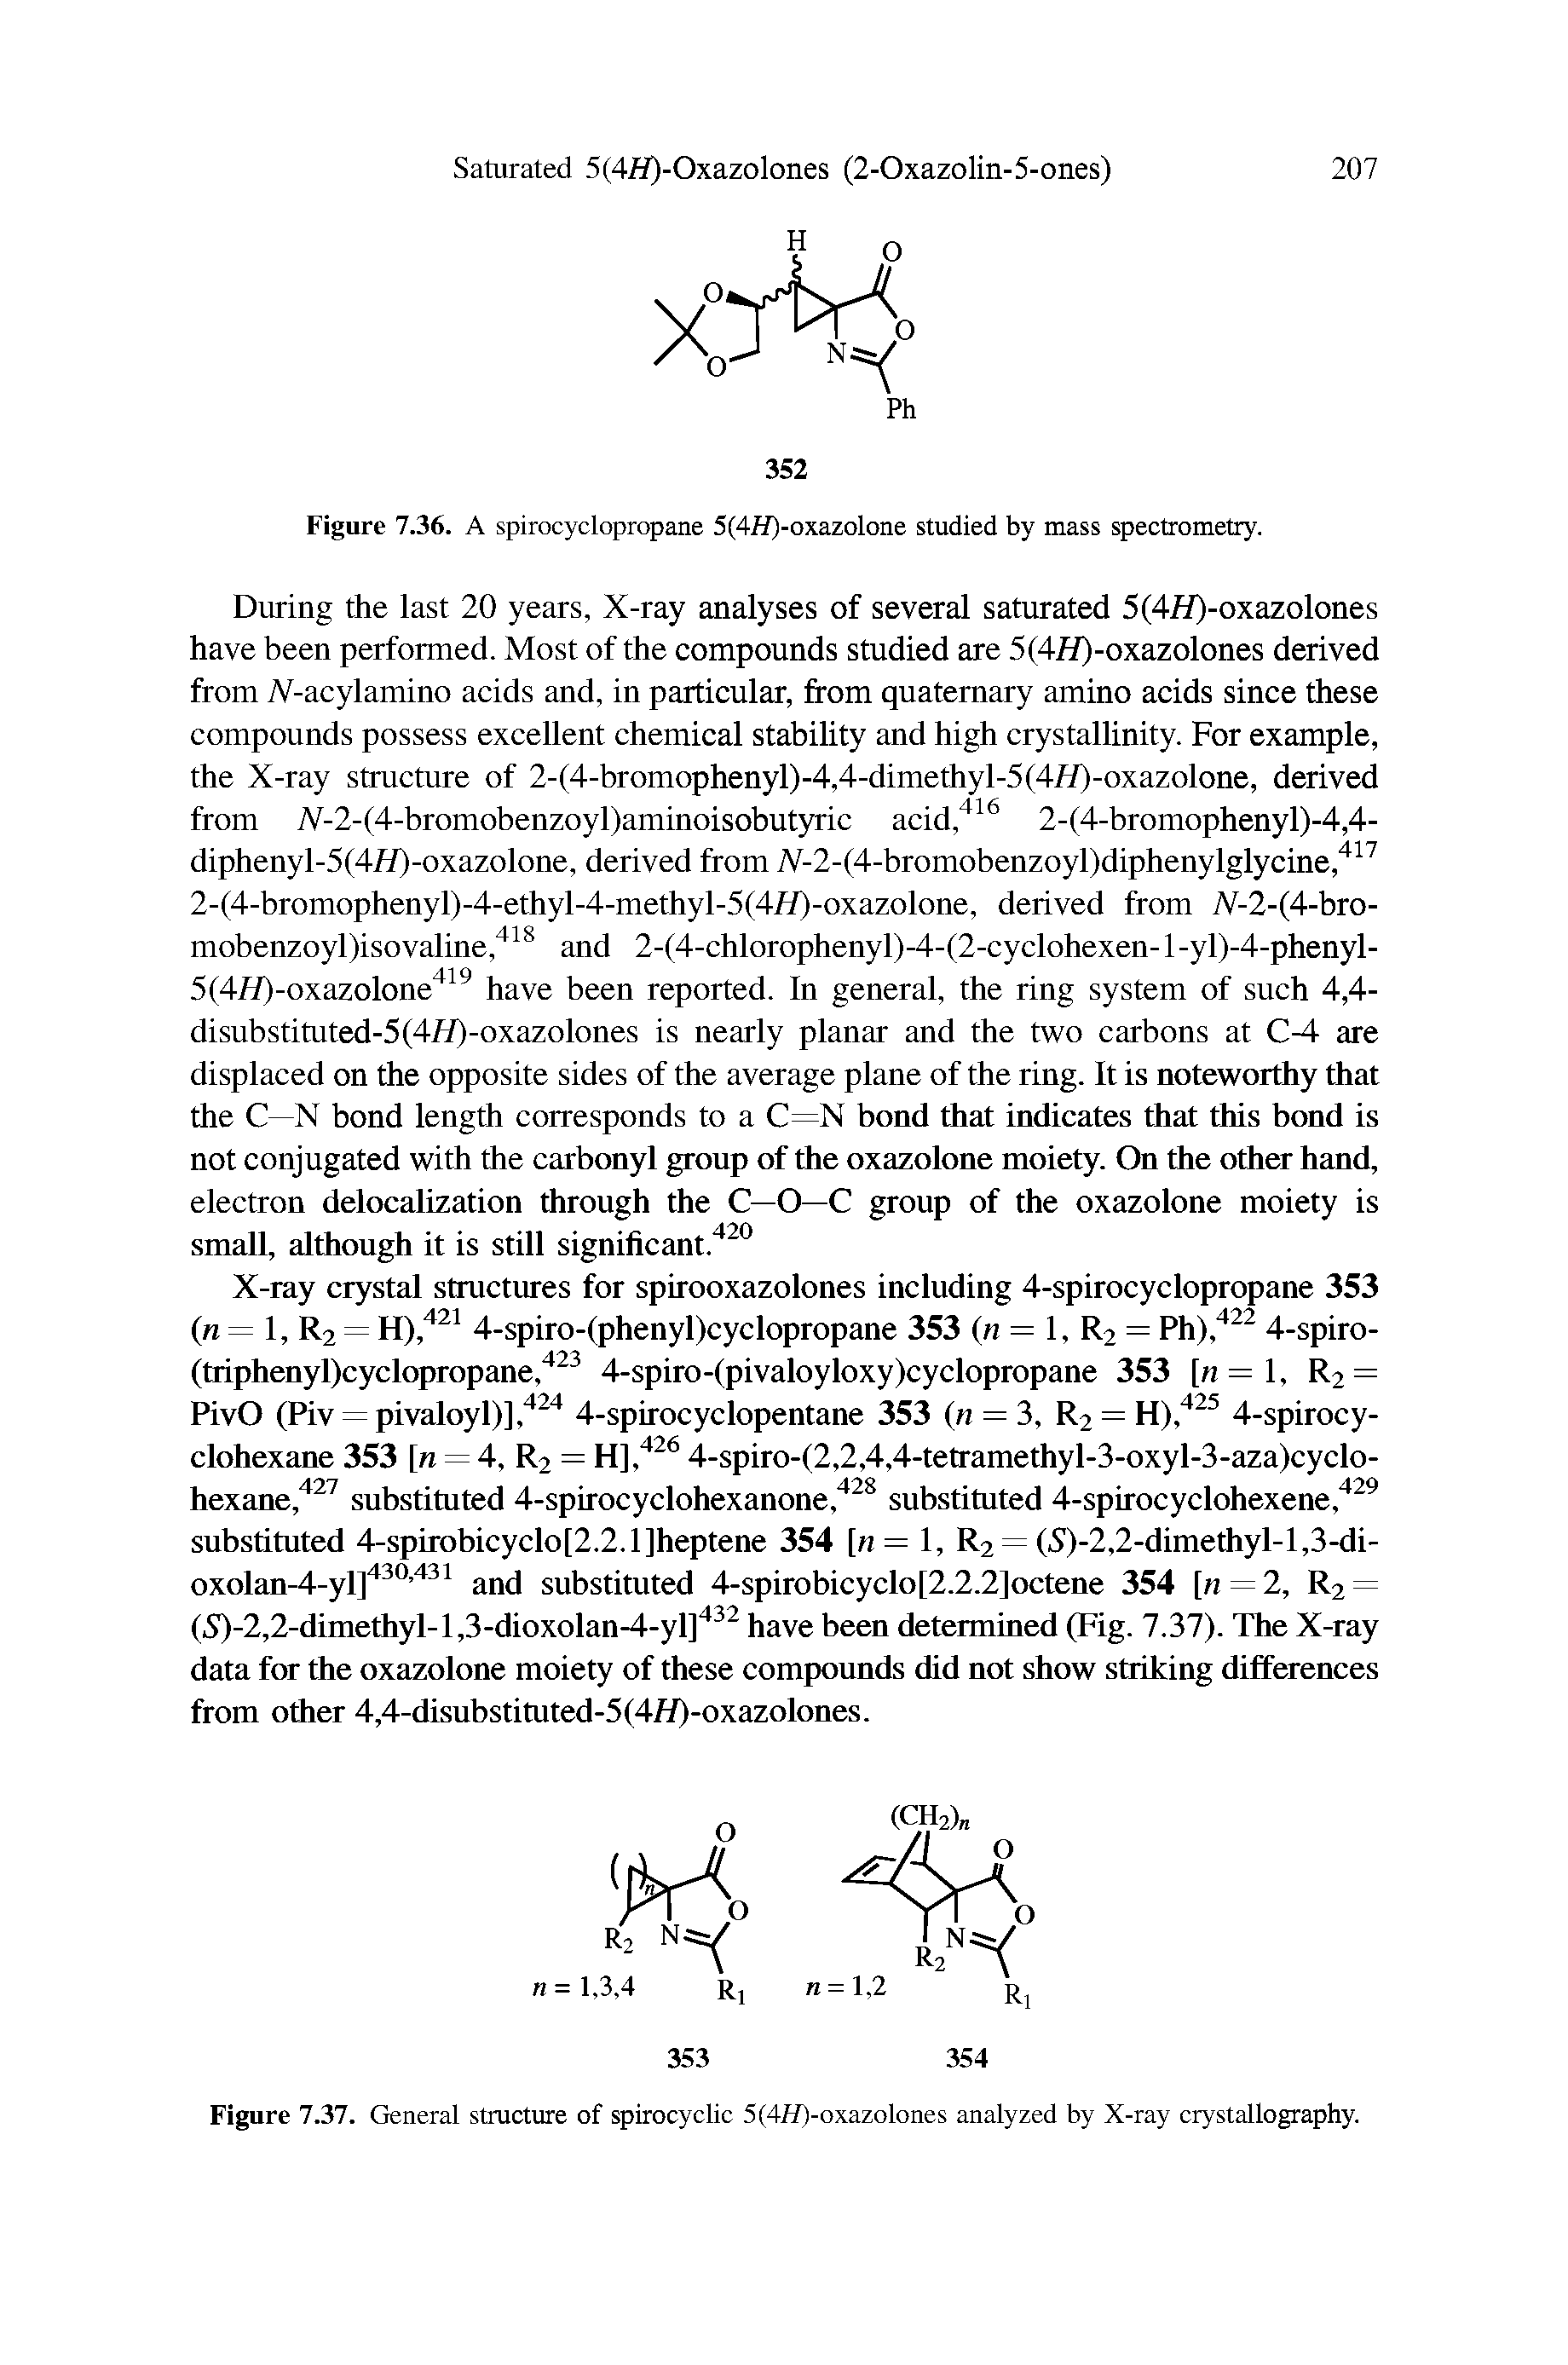 Figure 7.36. A spirocyclopropane 5(47T)-oxazolone studied by mass spectrometry.